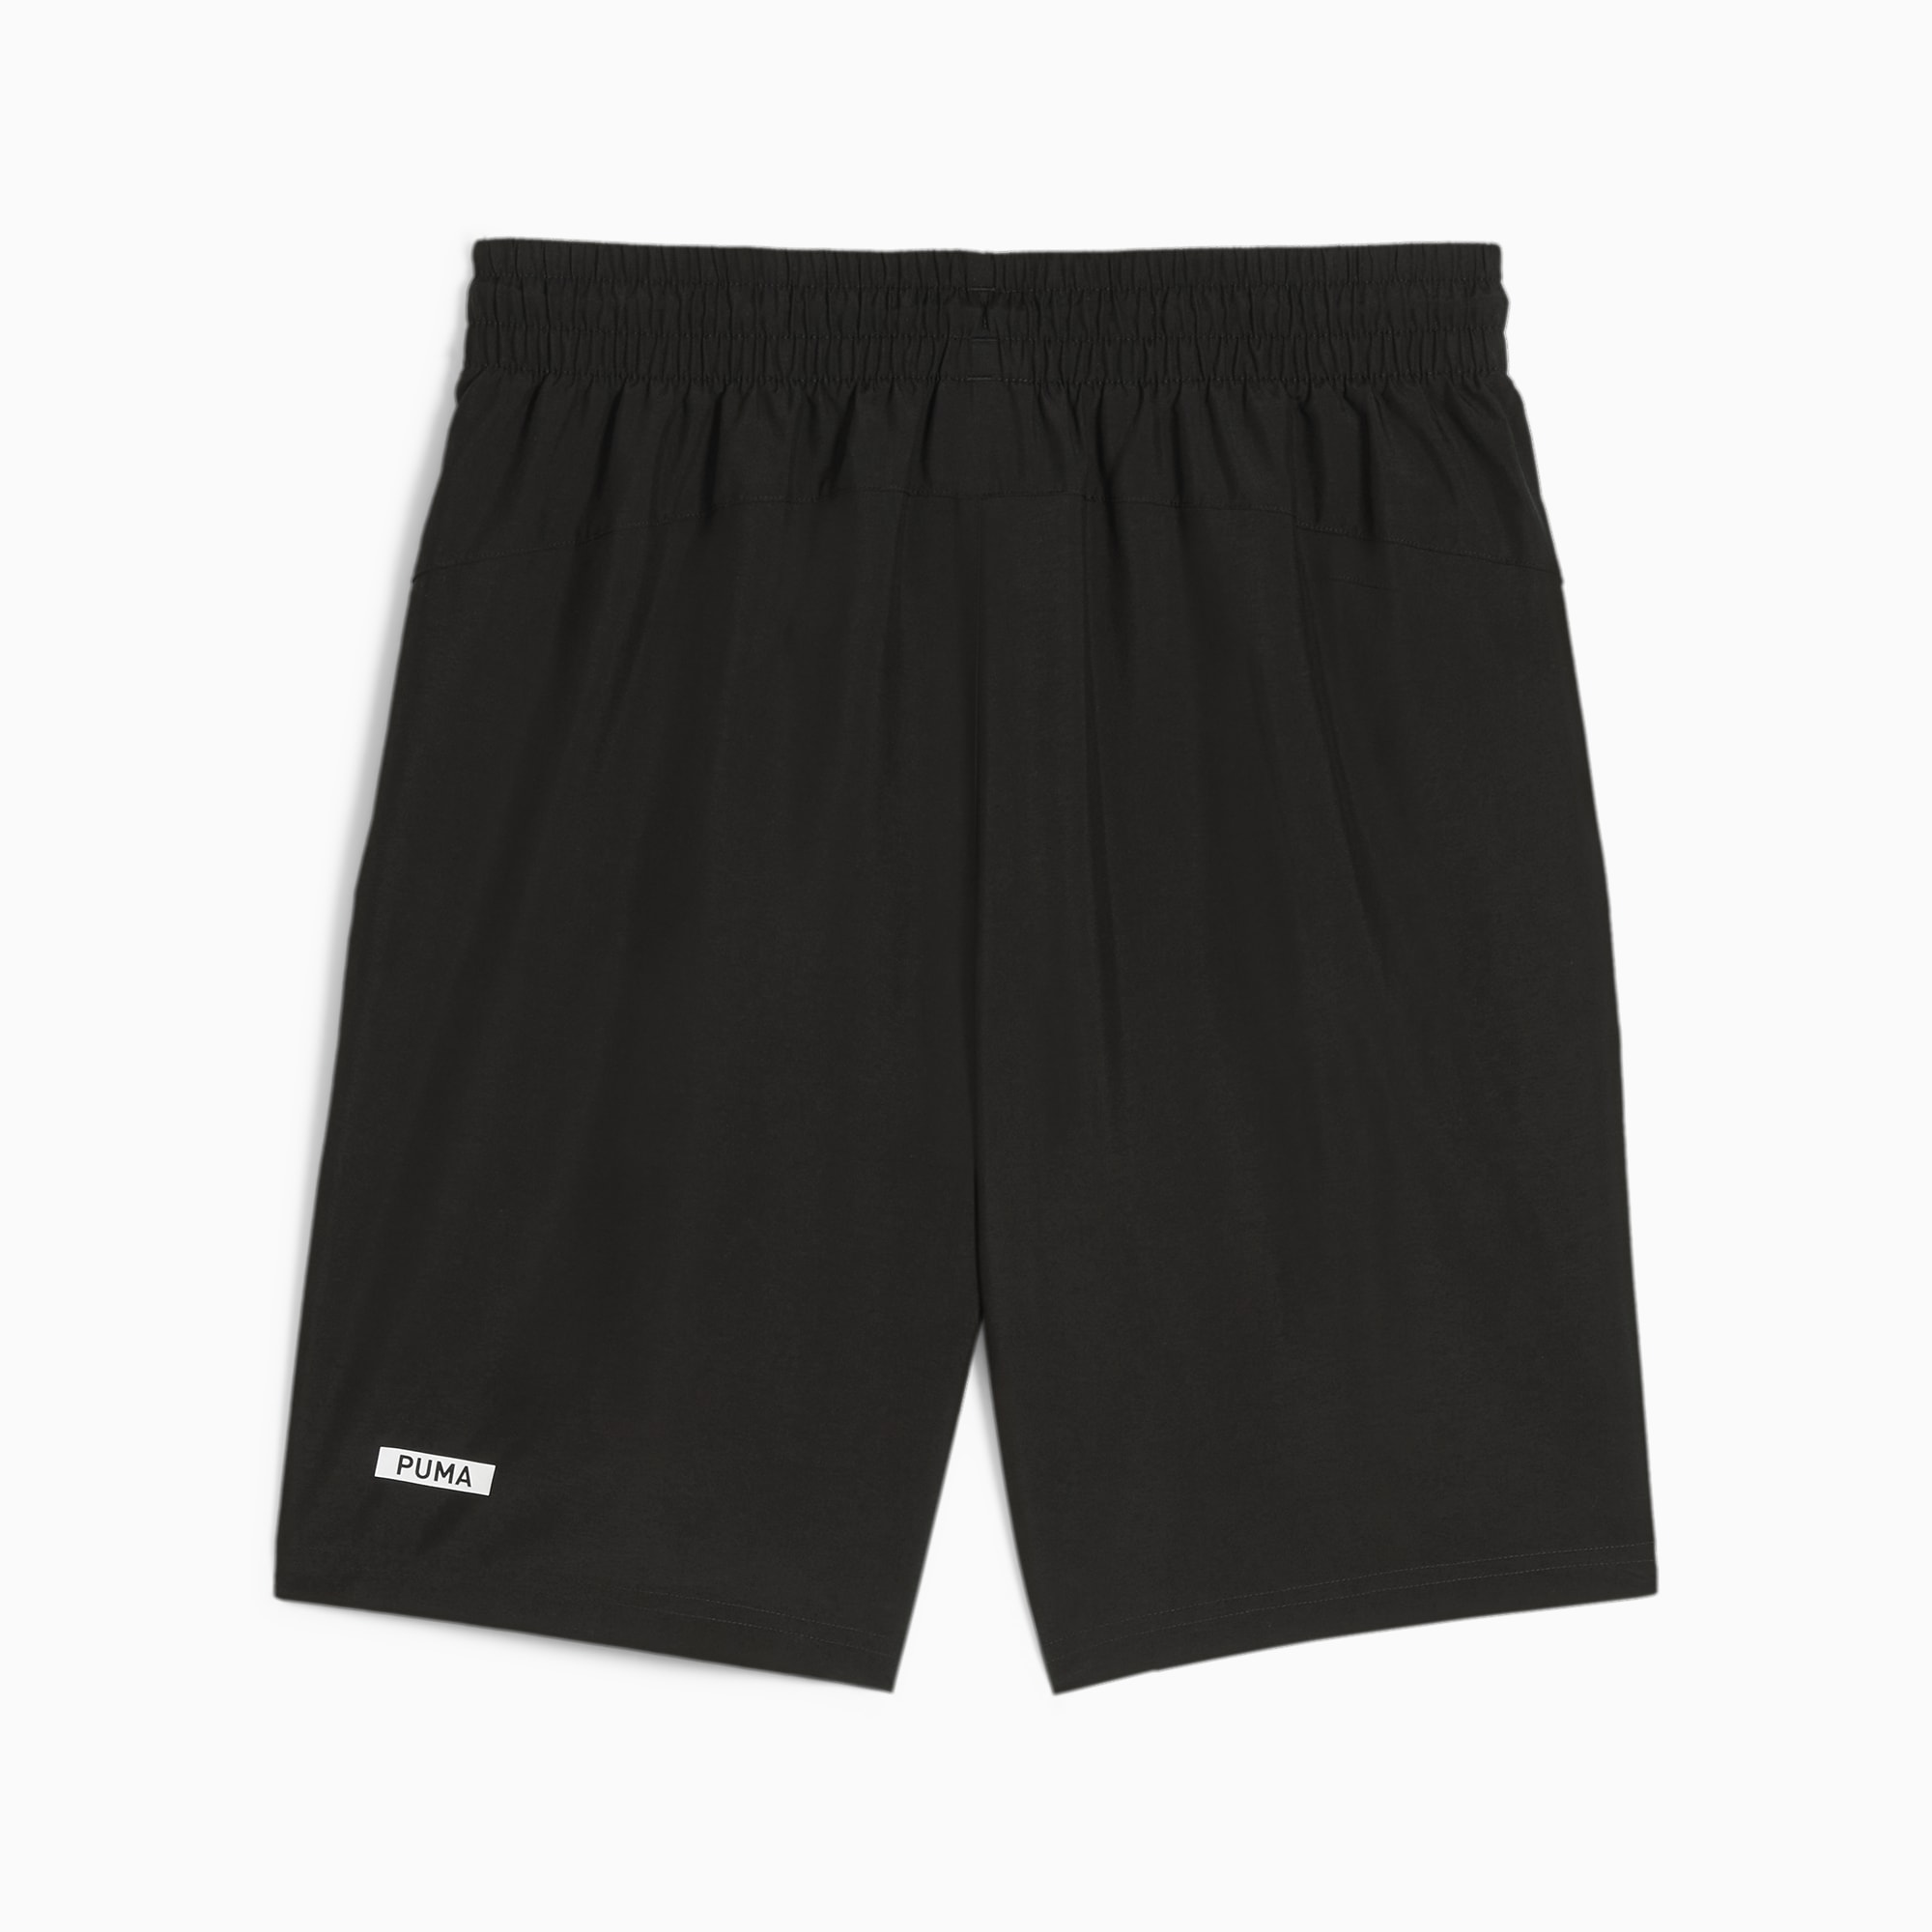 PUMA Rad/Cal Men's Woven Shorts, Black, Size XS, Clothing